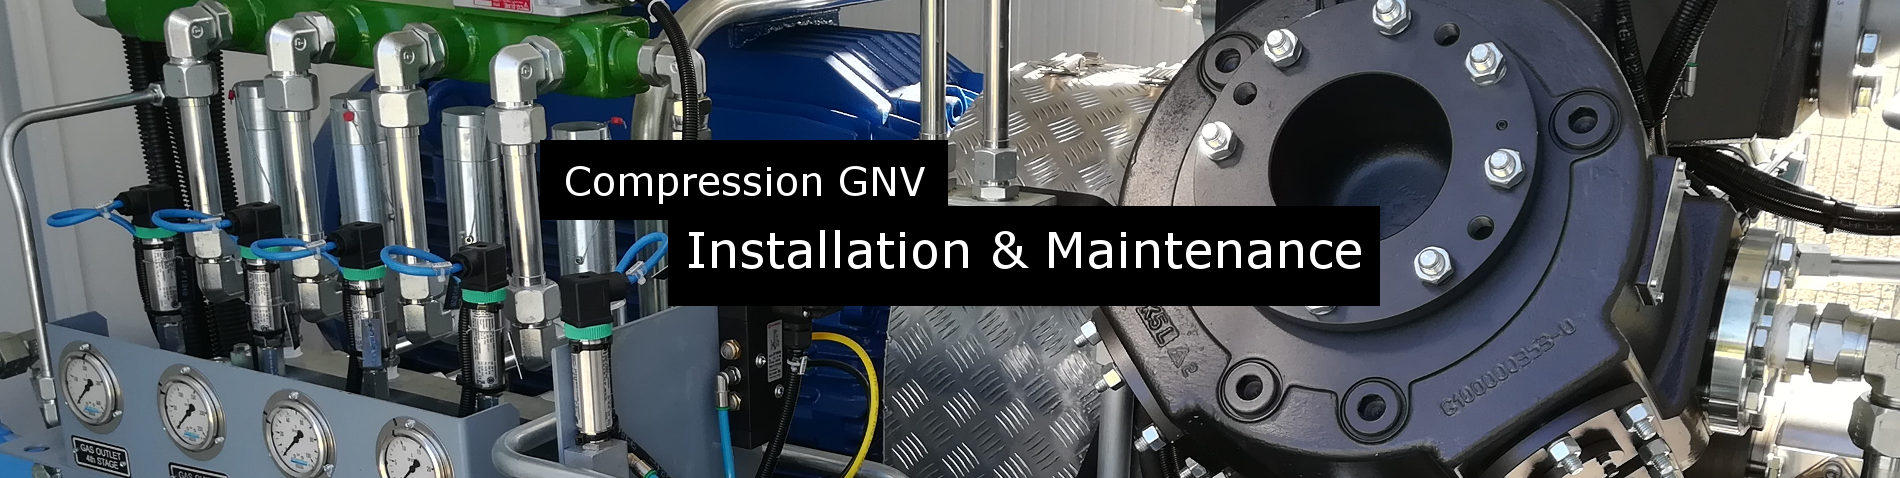 Stations Gaz GNV, installation et maintenance